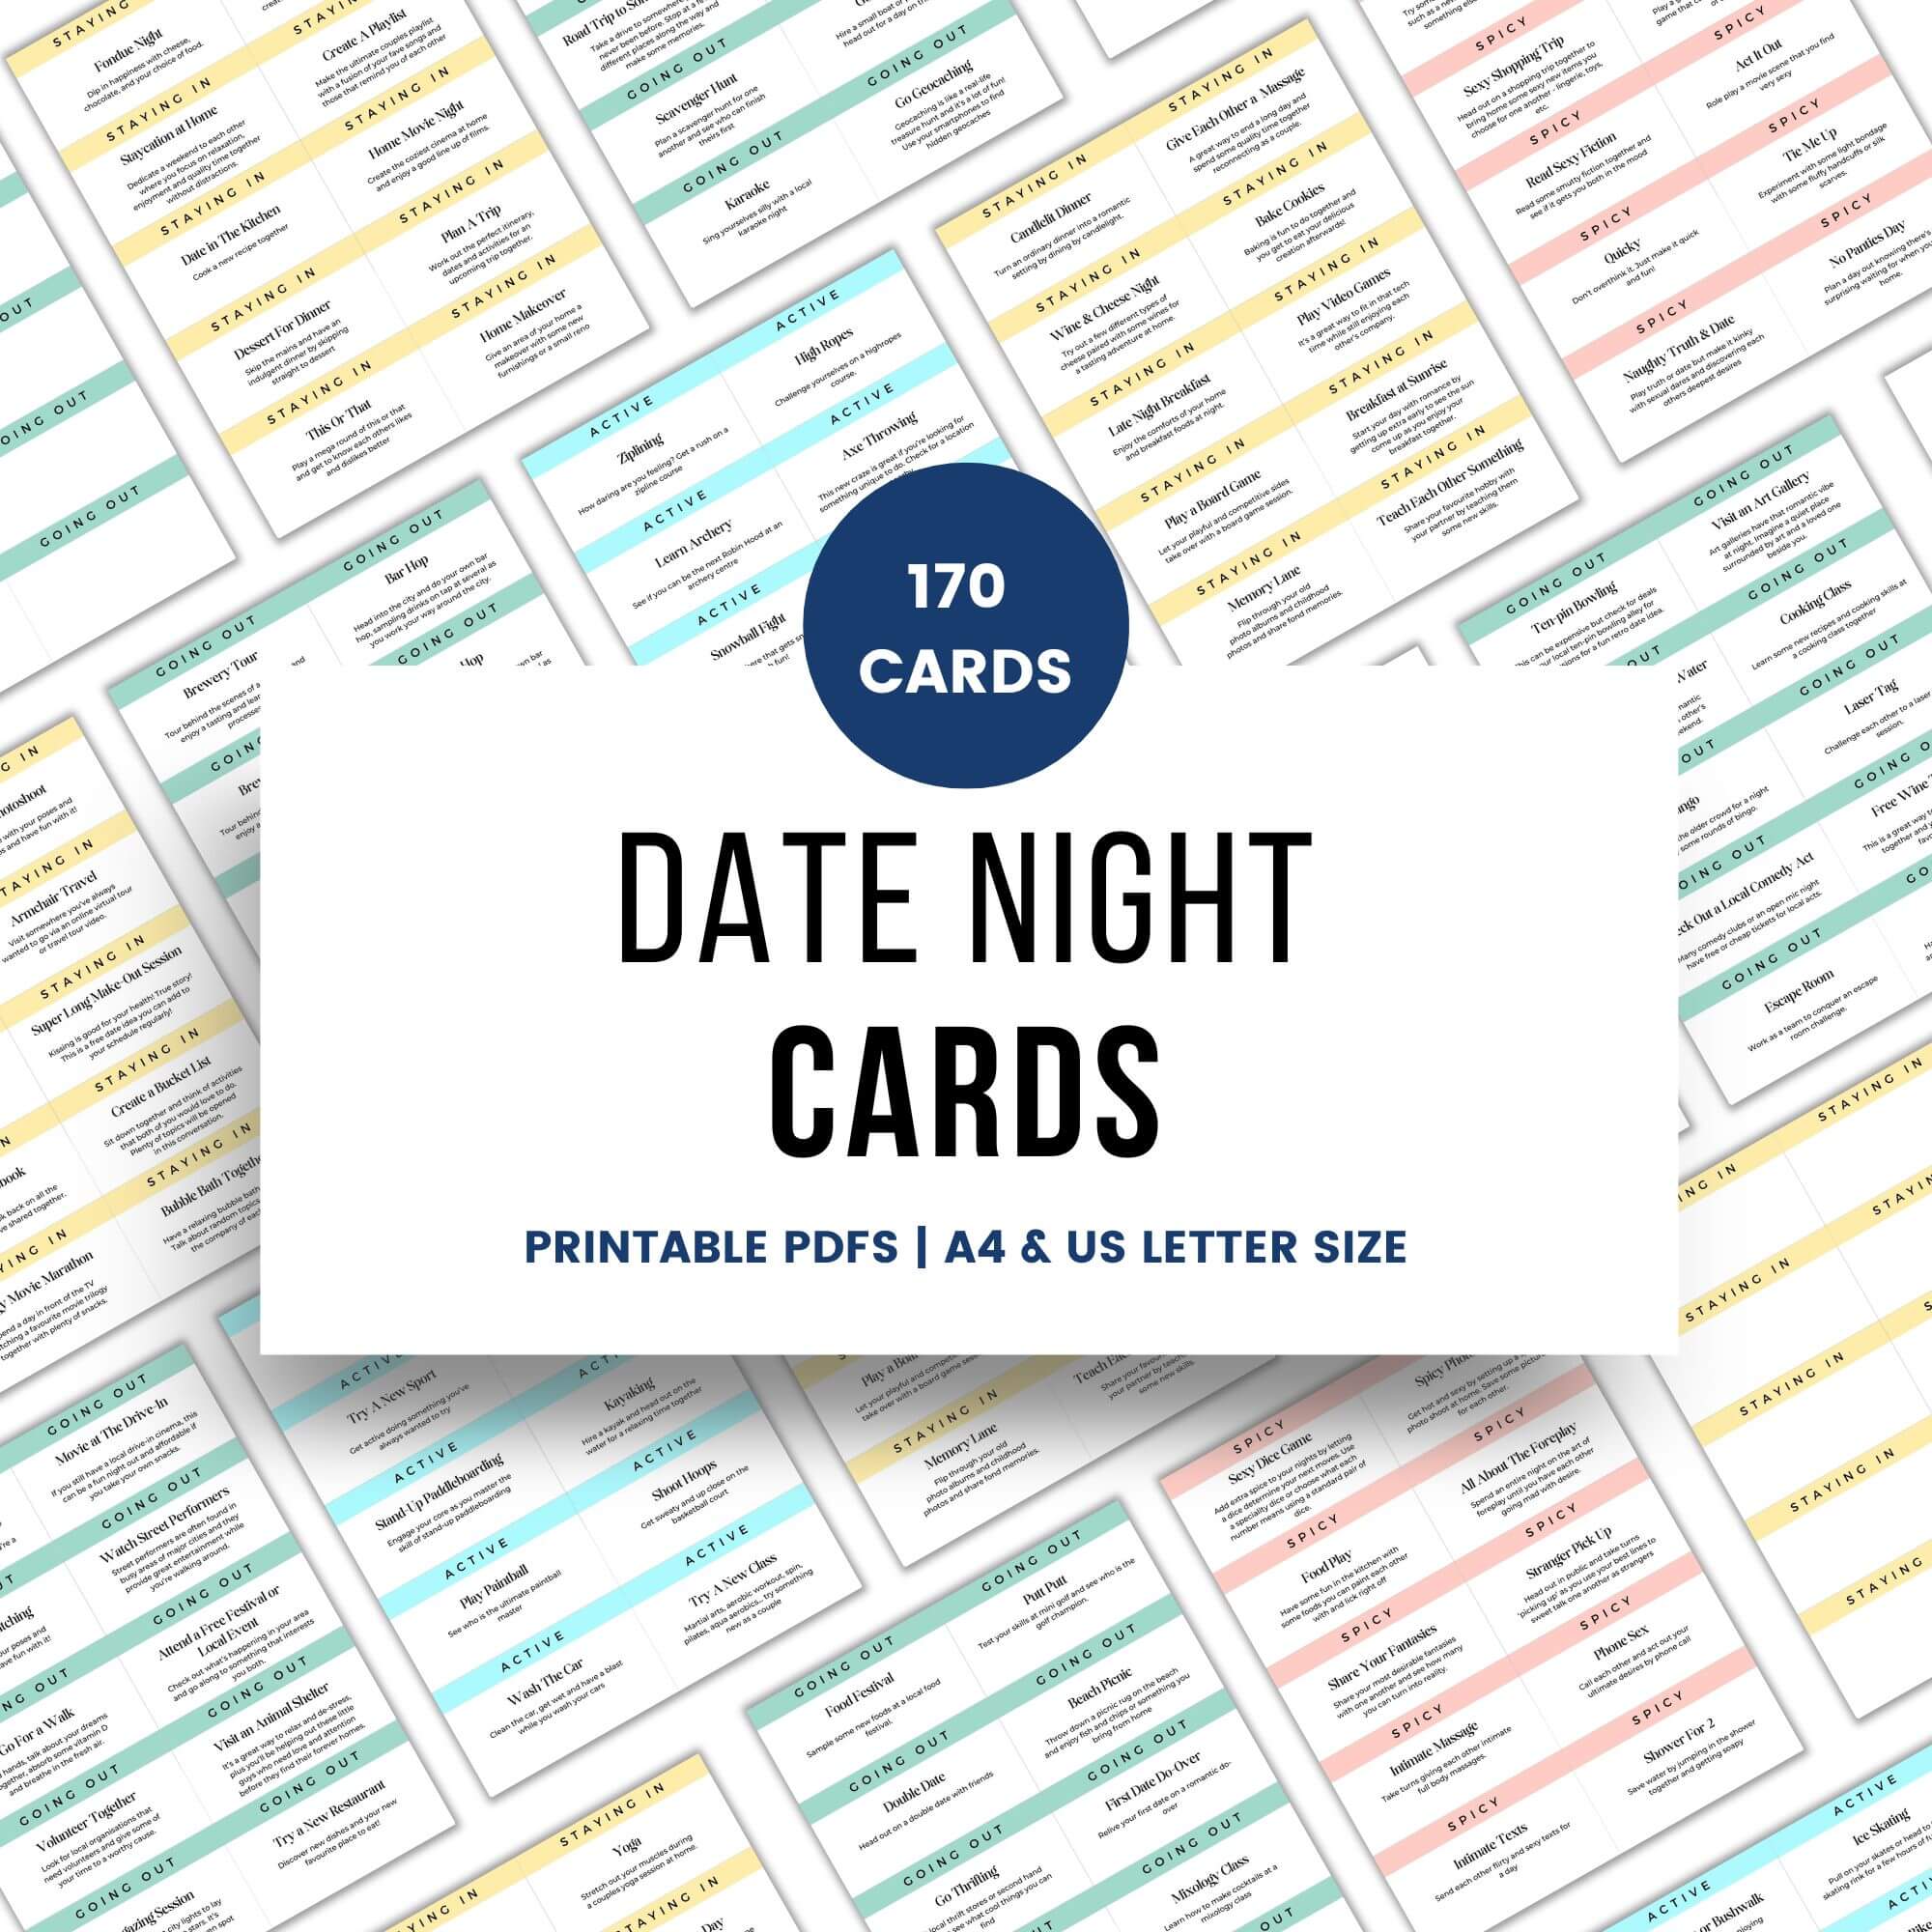 Date night cards.